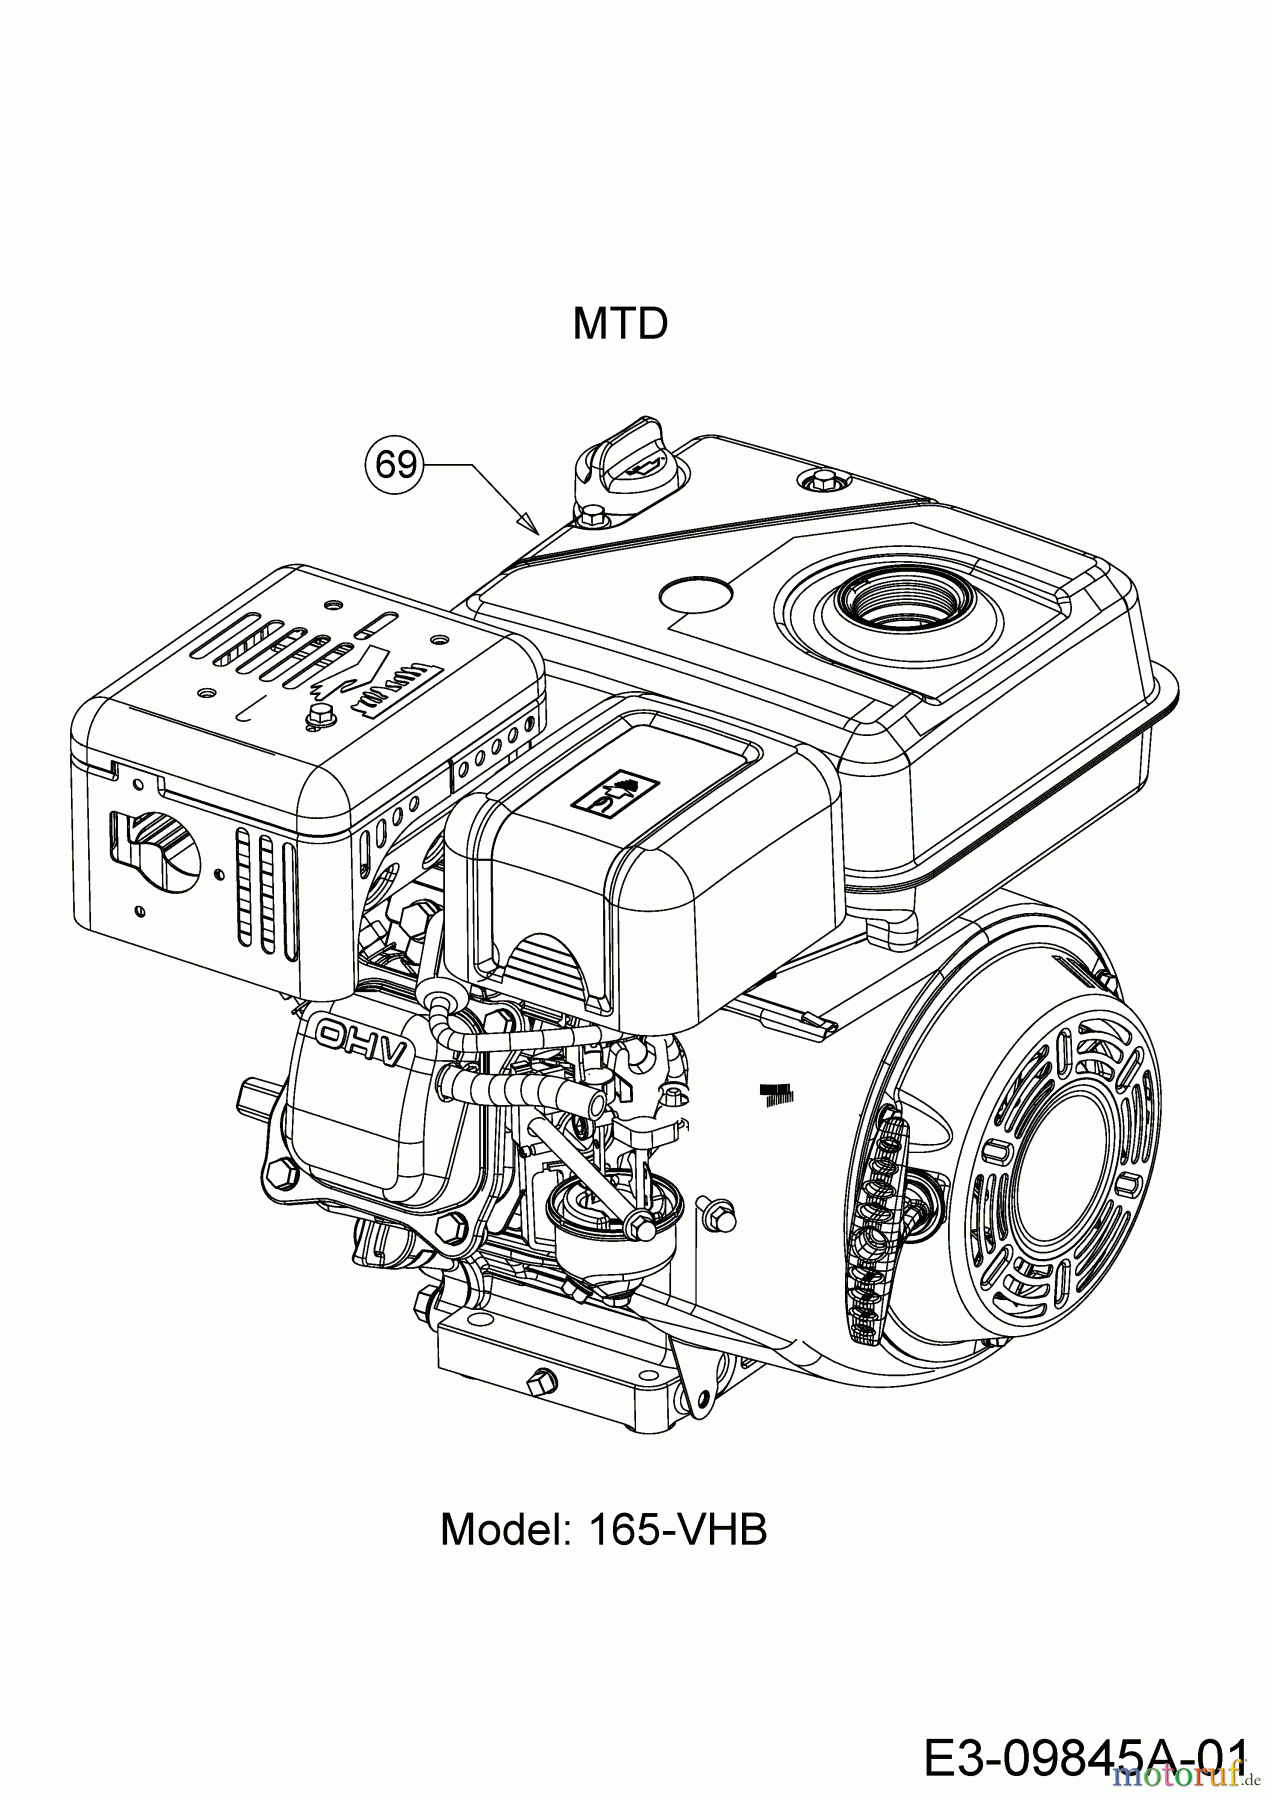  MTD Tillers T/330 M 21D-33MV678  (2018) Engine MTD